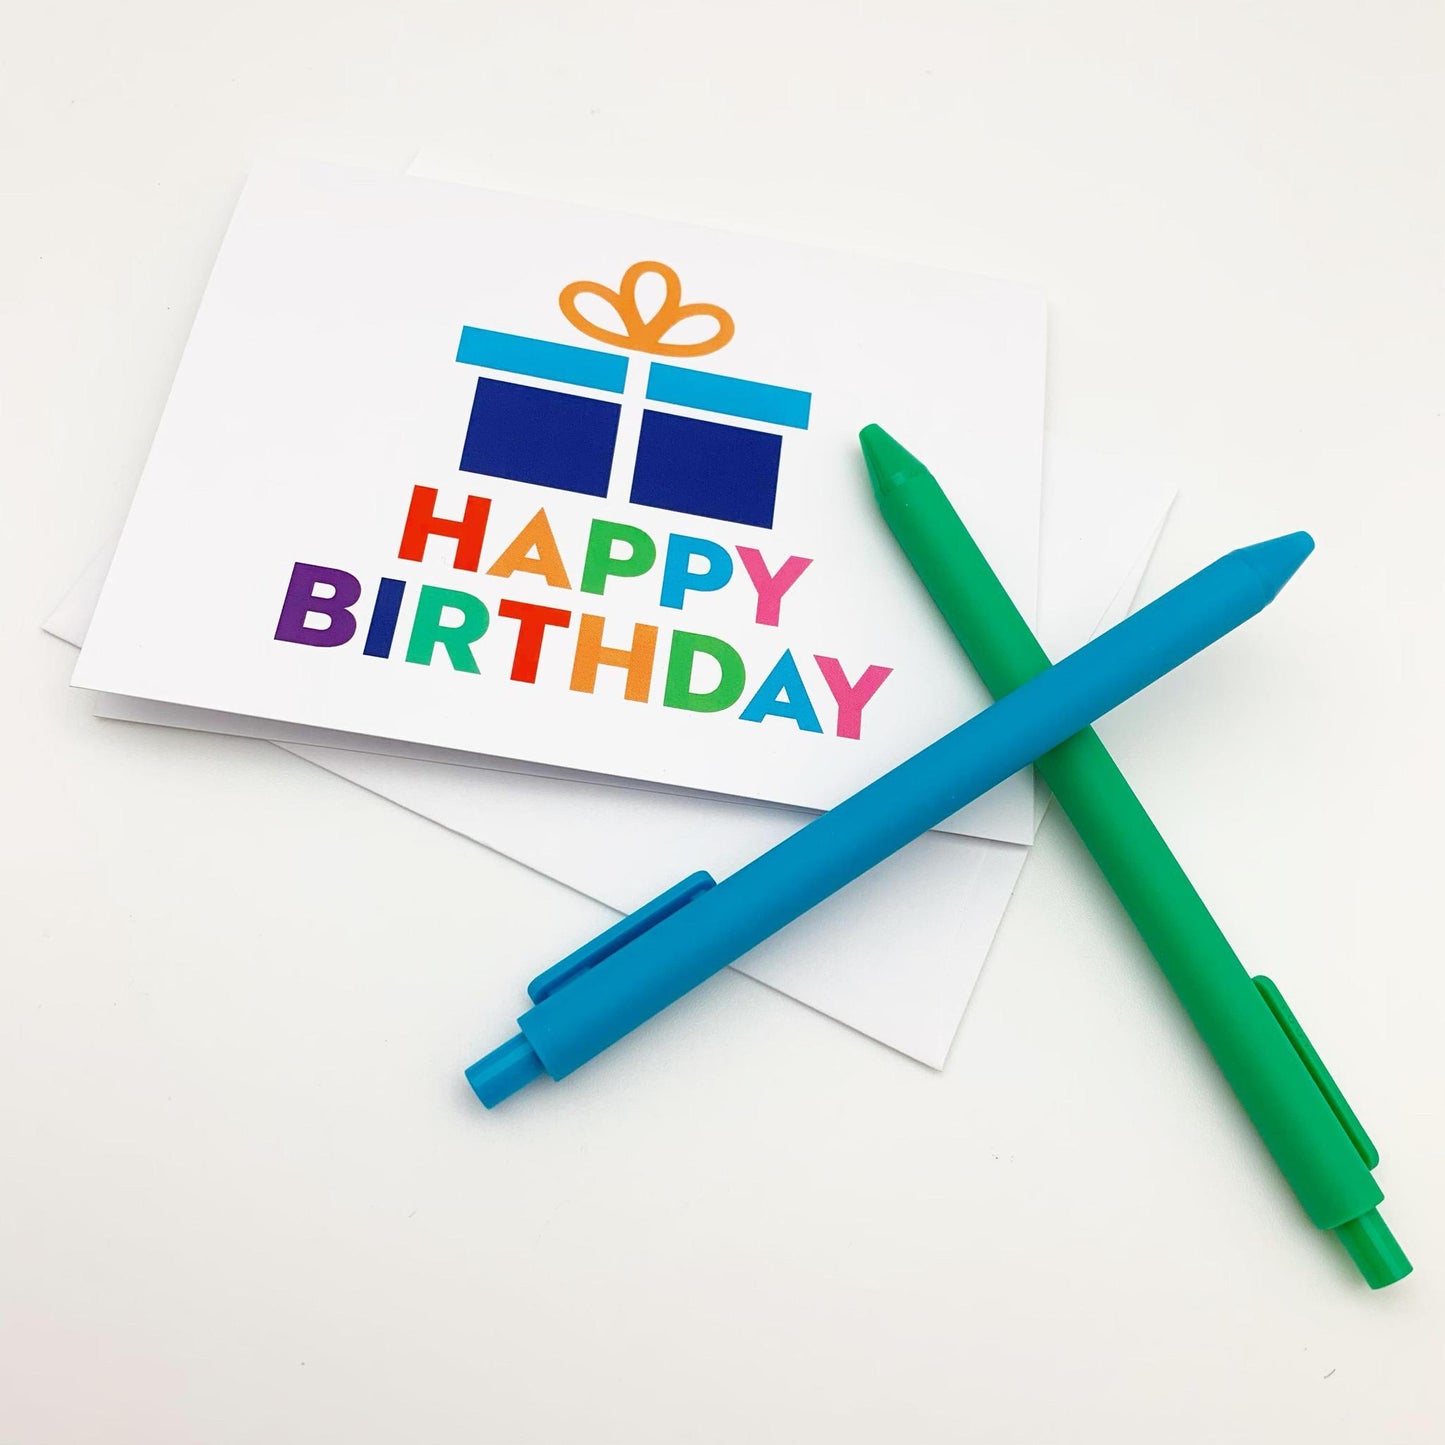 Greeting Card - "Happy Birthday" Present